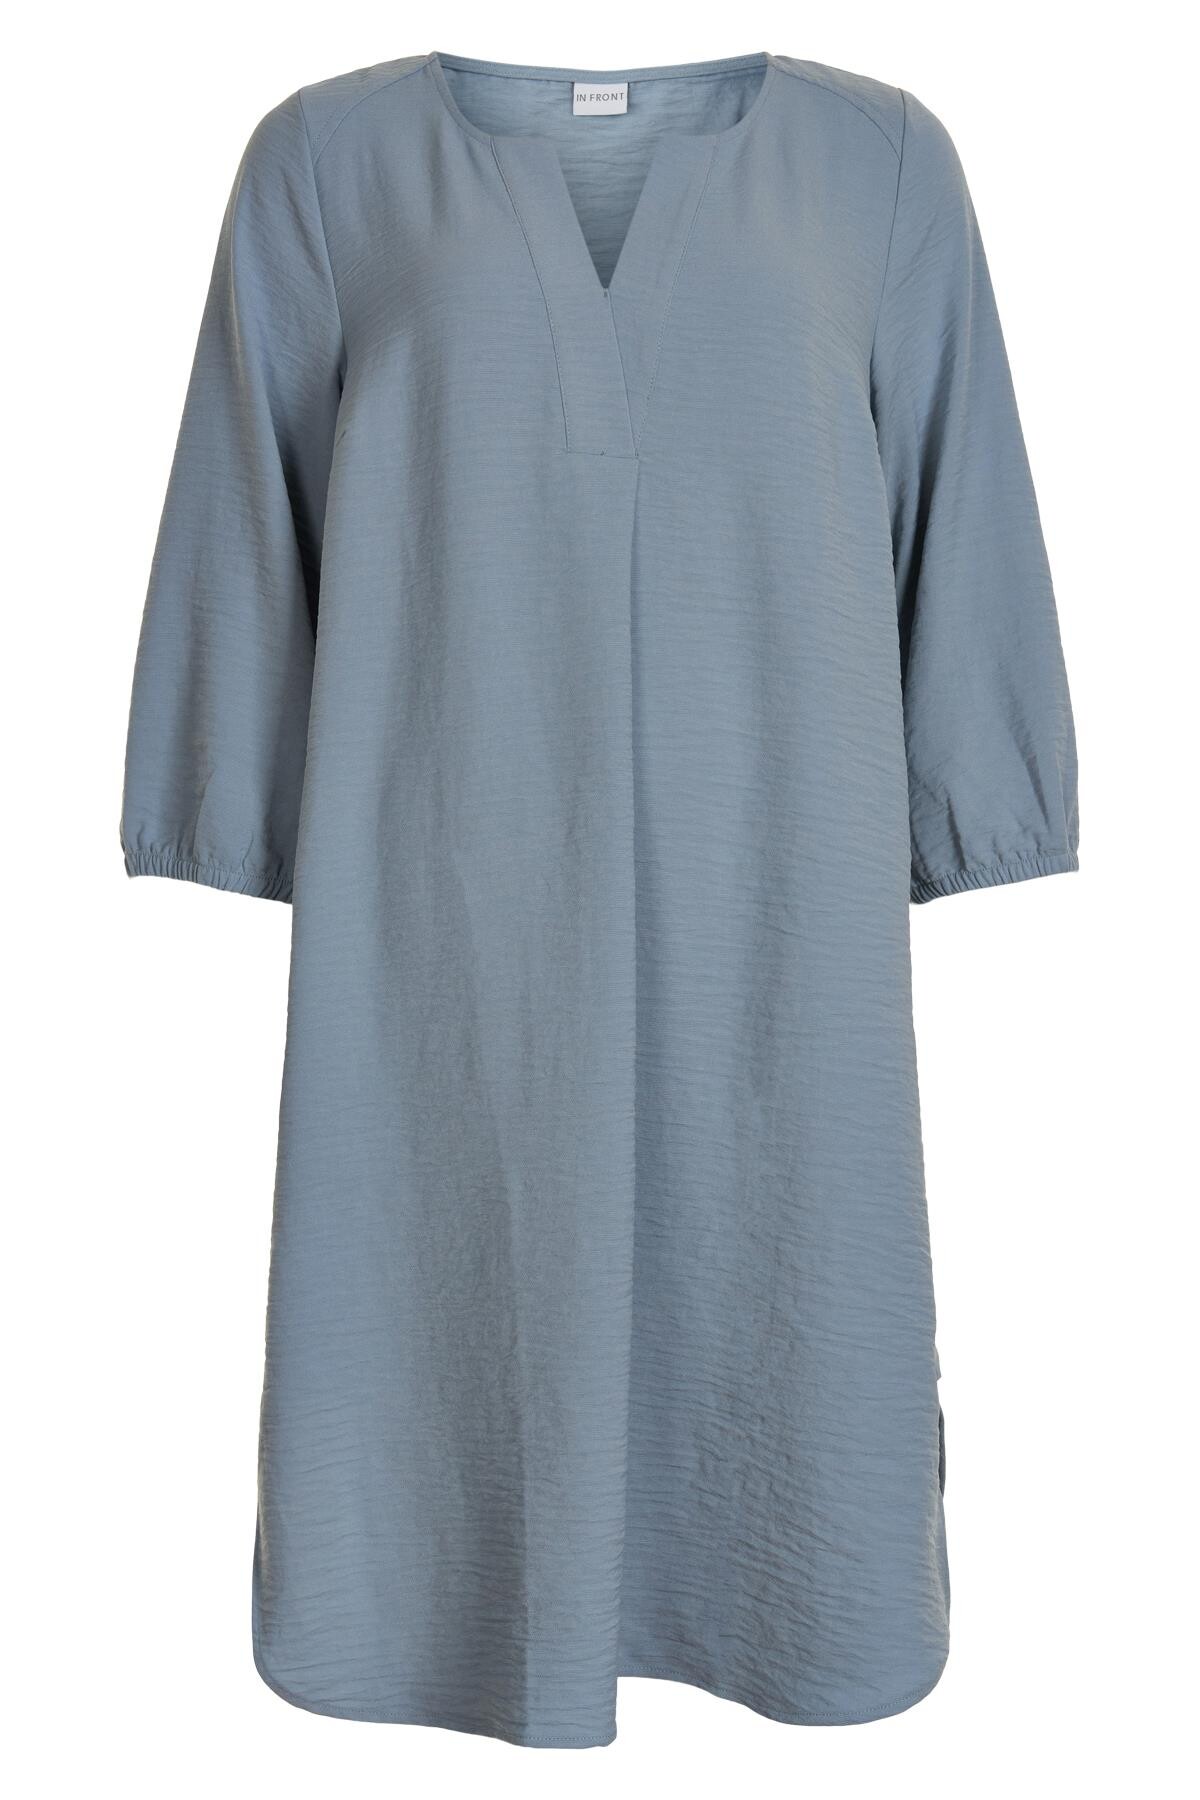 IN FRONT MELODY DRESS 14828 508 (Dusty Blue 508, L)